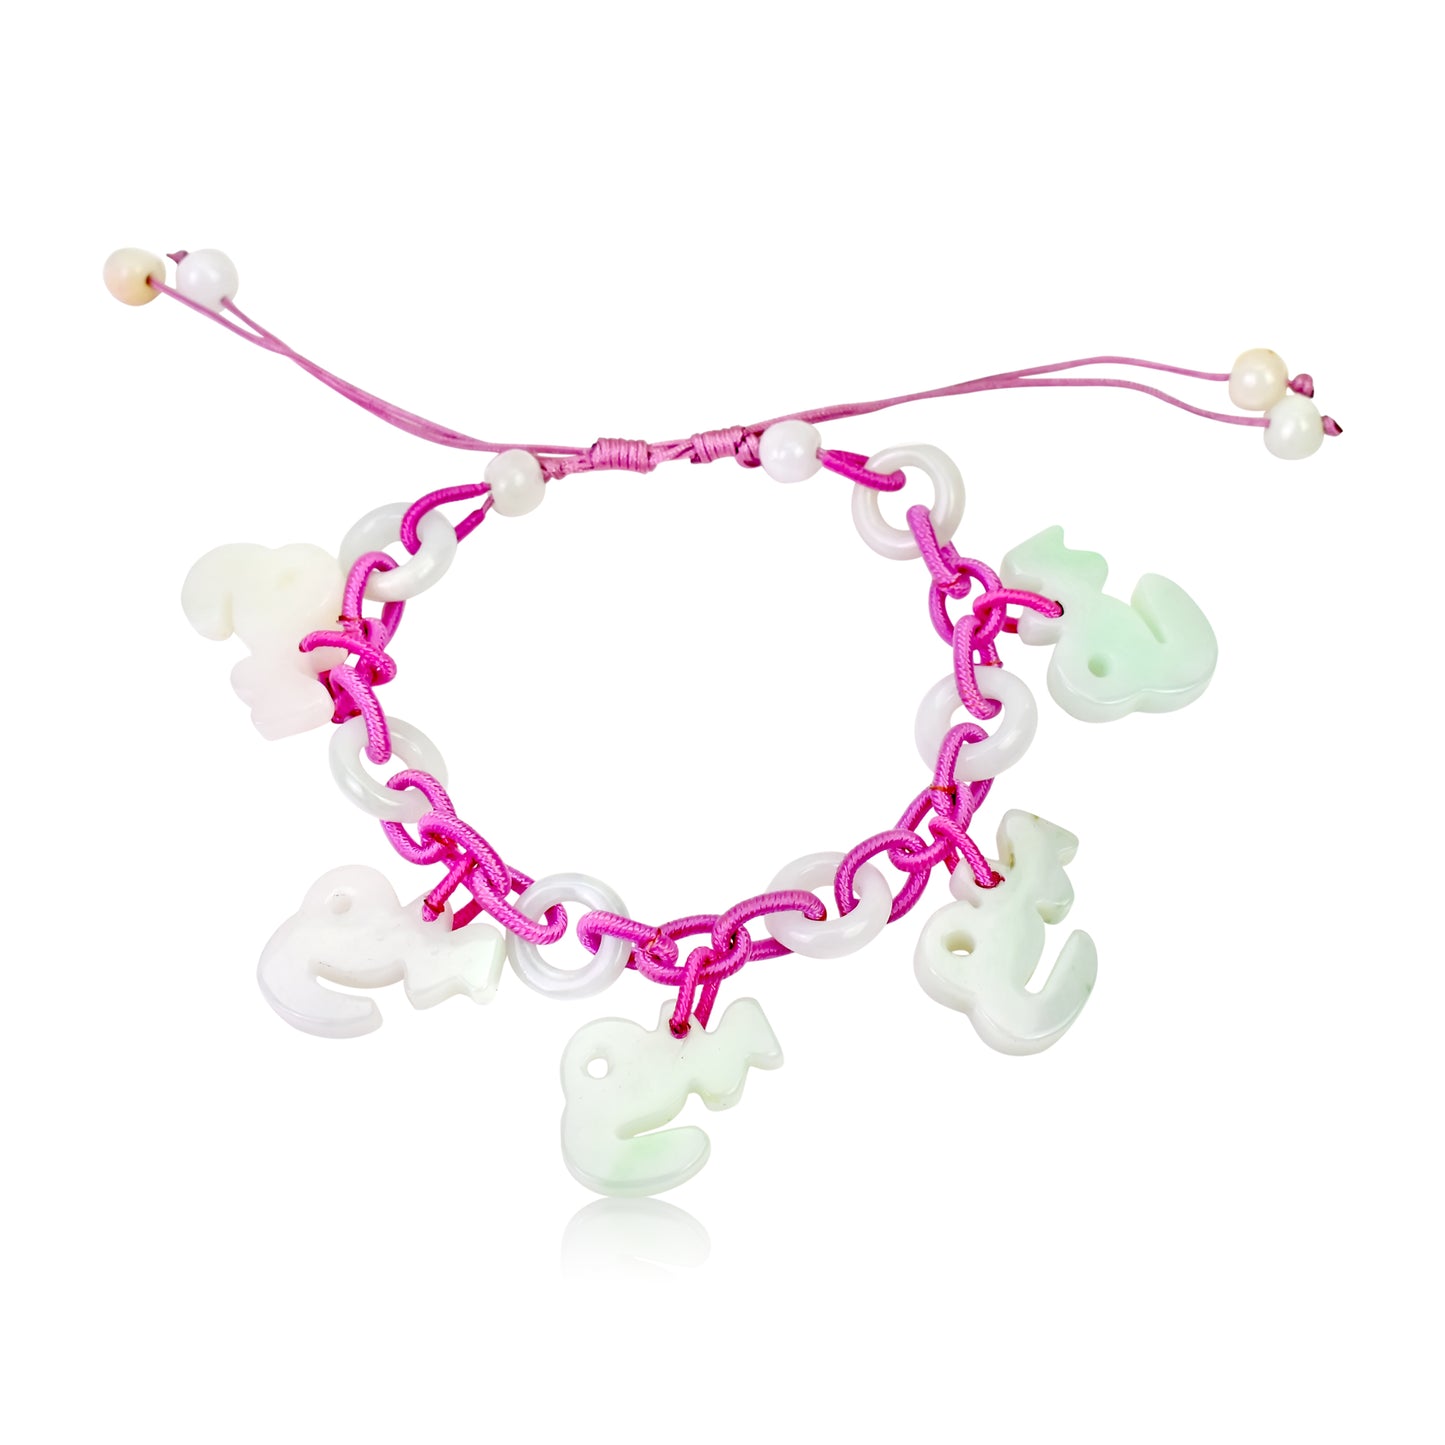 Honor the Capricorn Zodiac with Handmade Jade Jewelry Bracelet made with Purple Cord